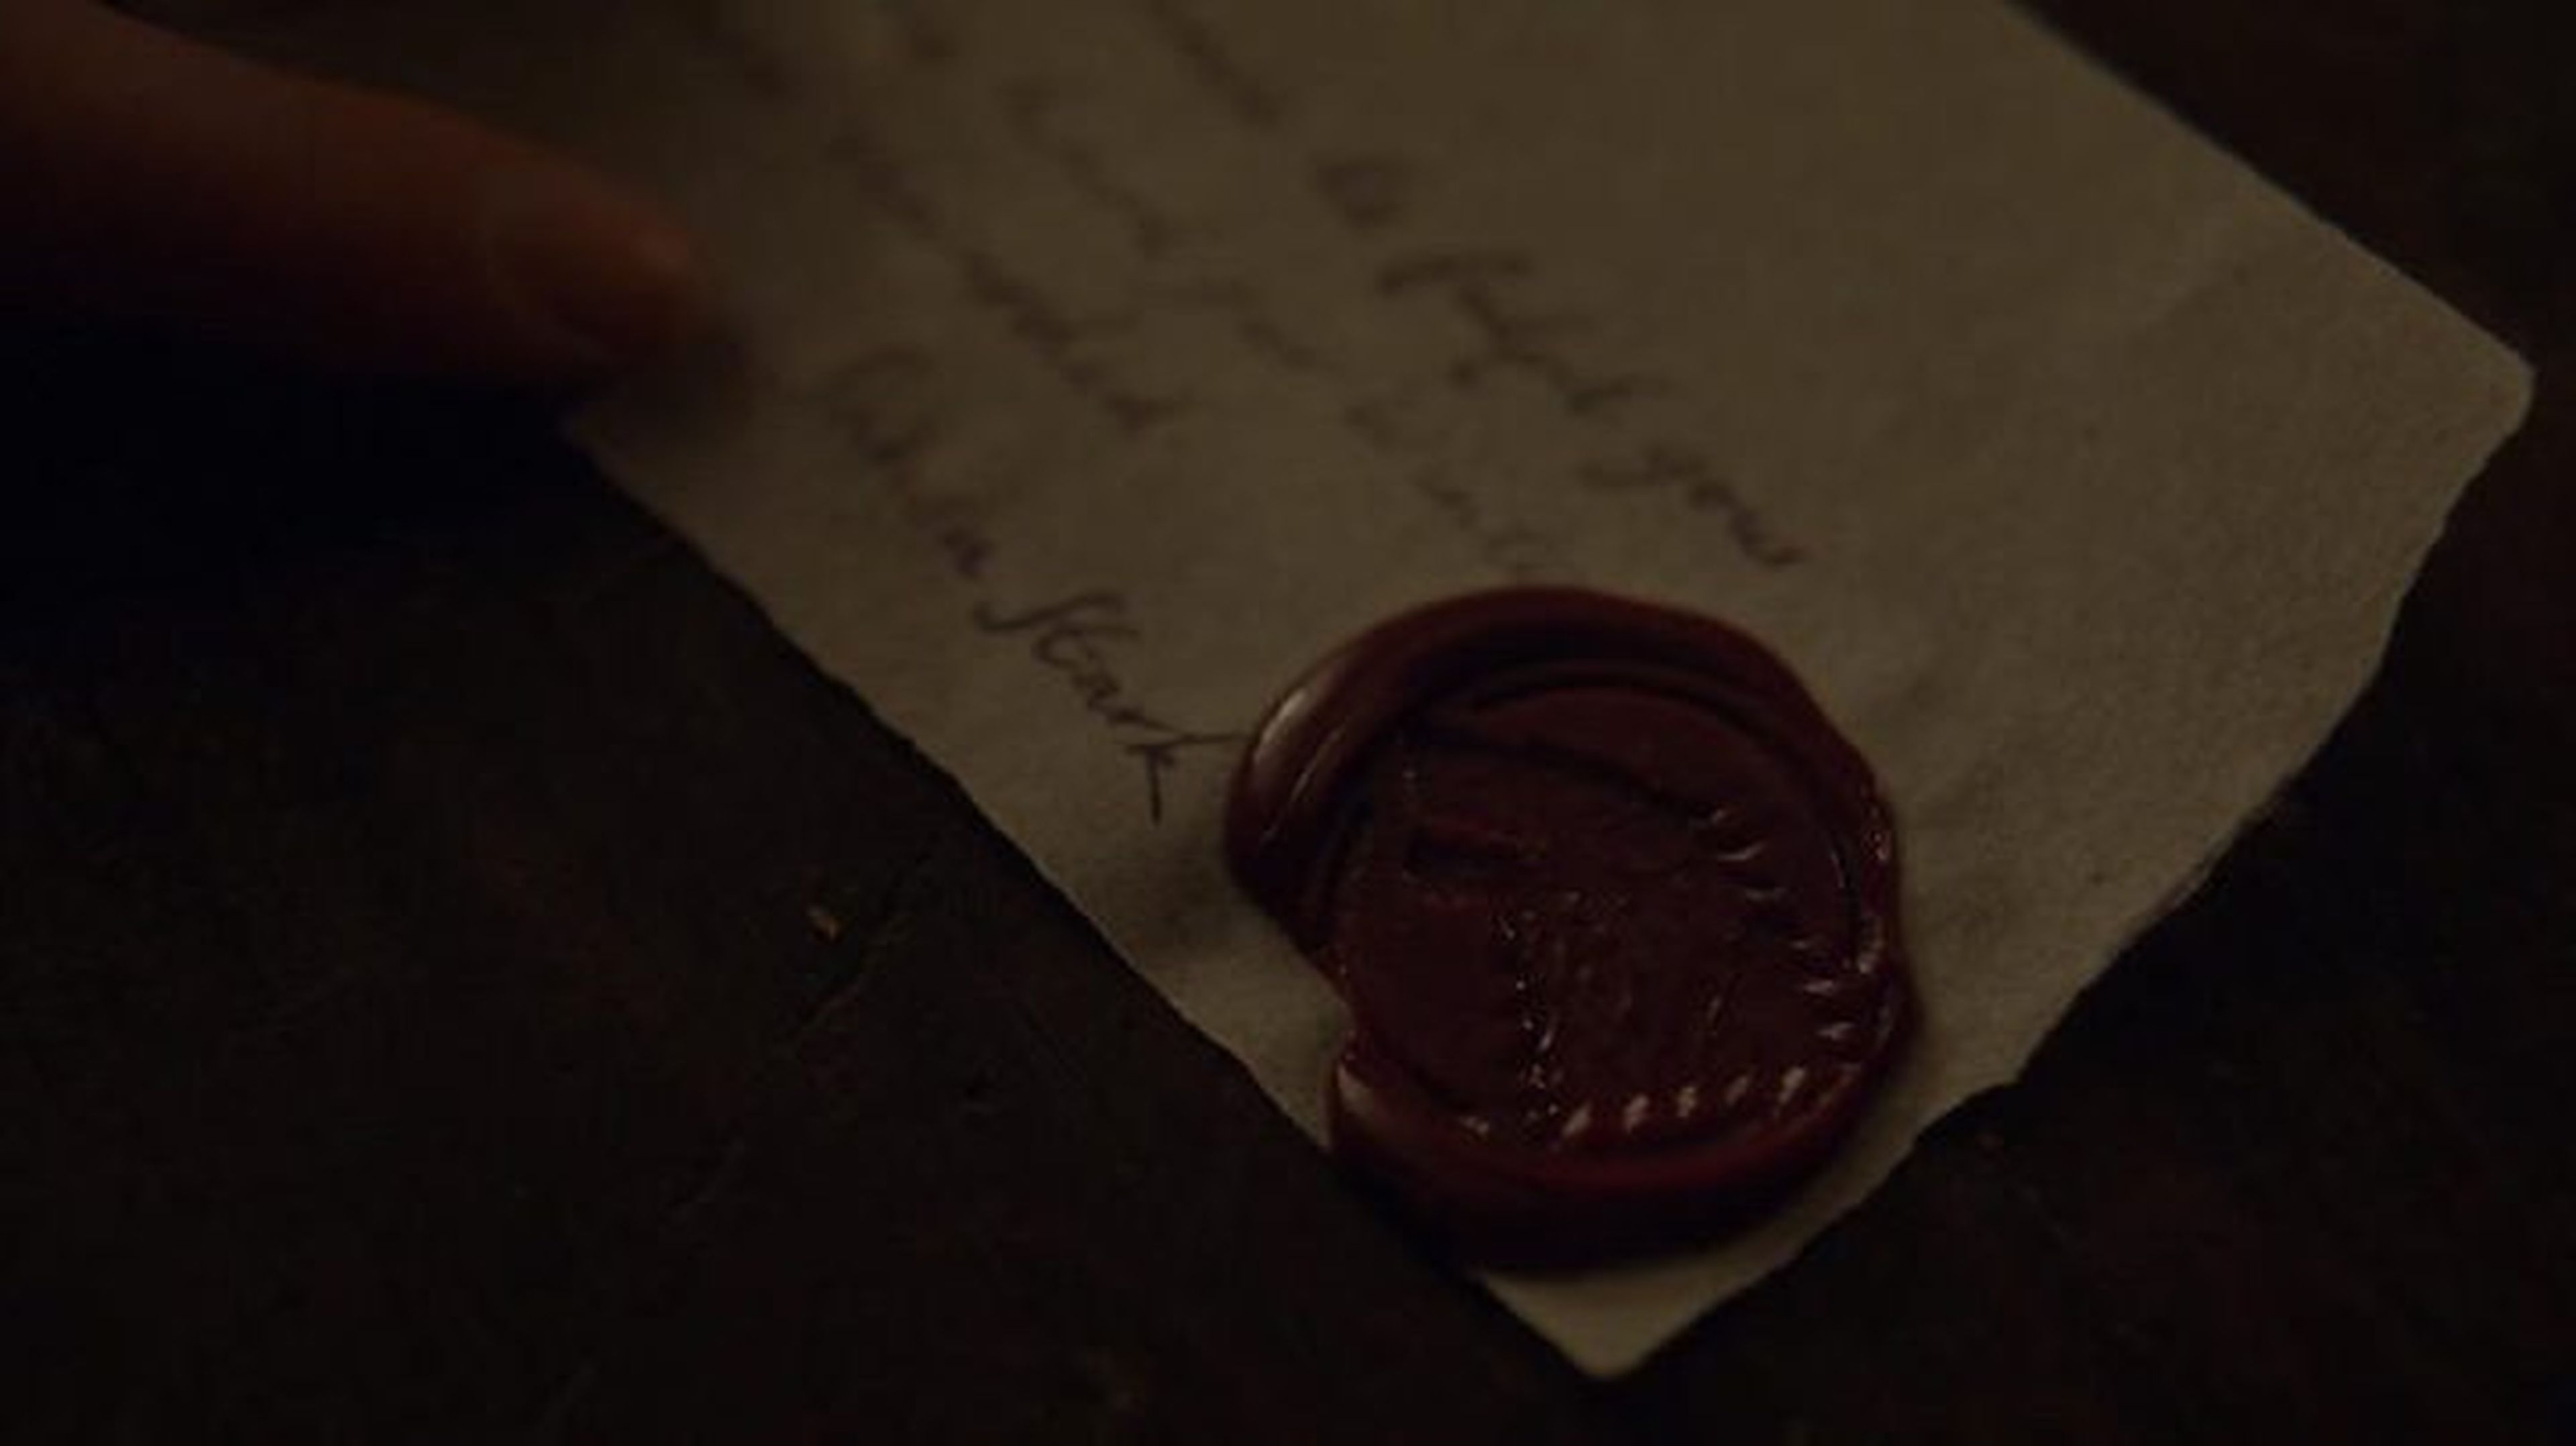 Juego de tronos 6x07 – ¿A quién va dirigida la carta de Sansa?